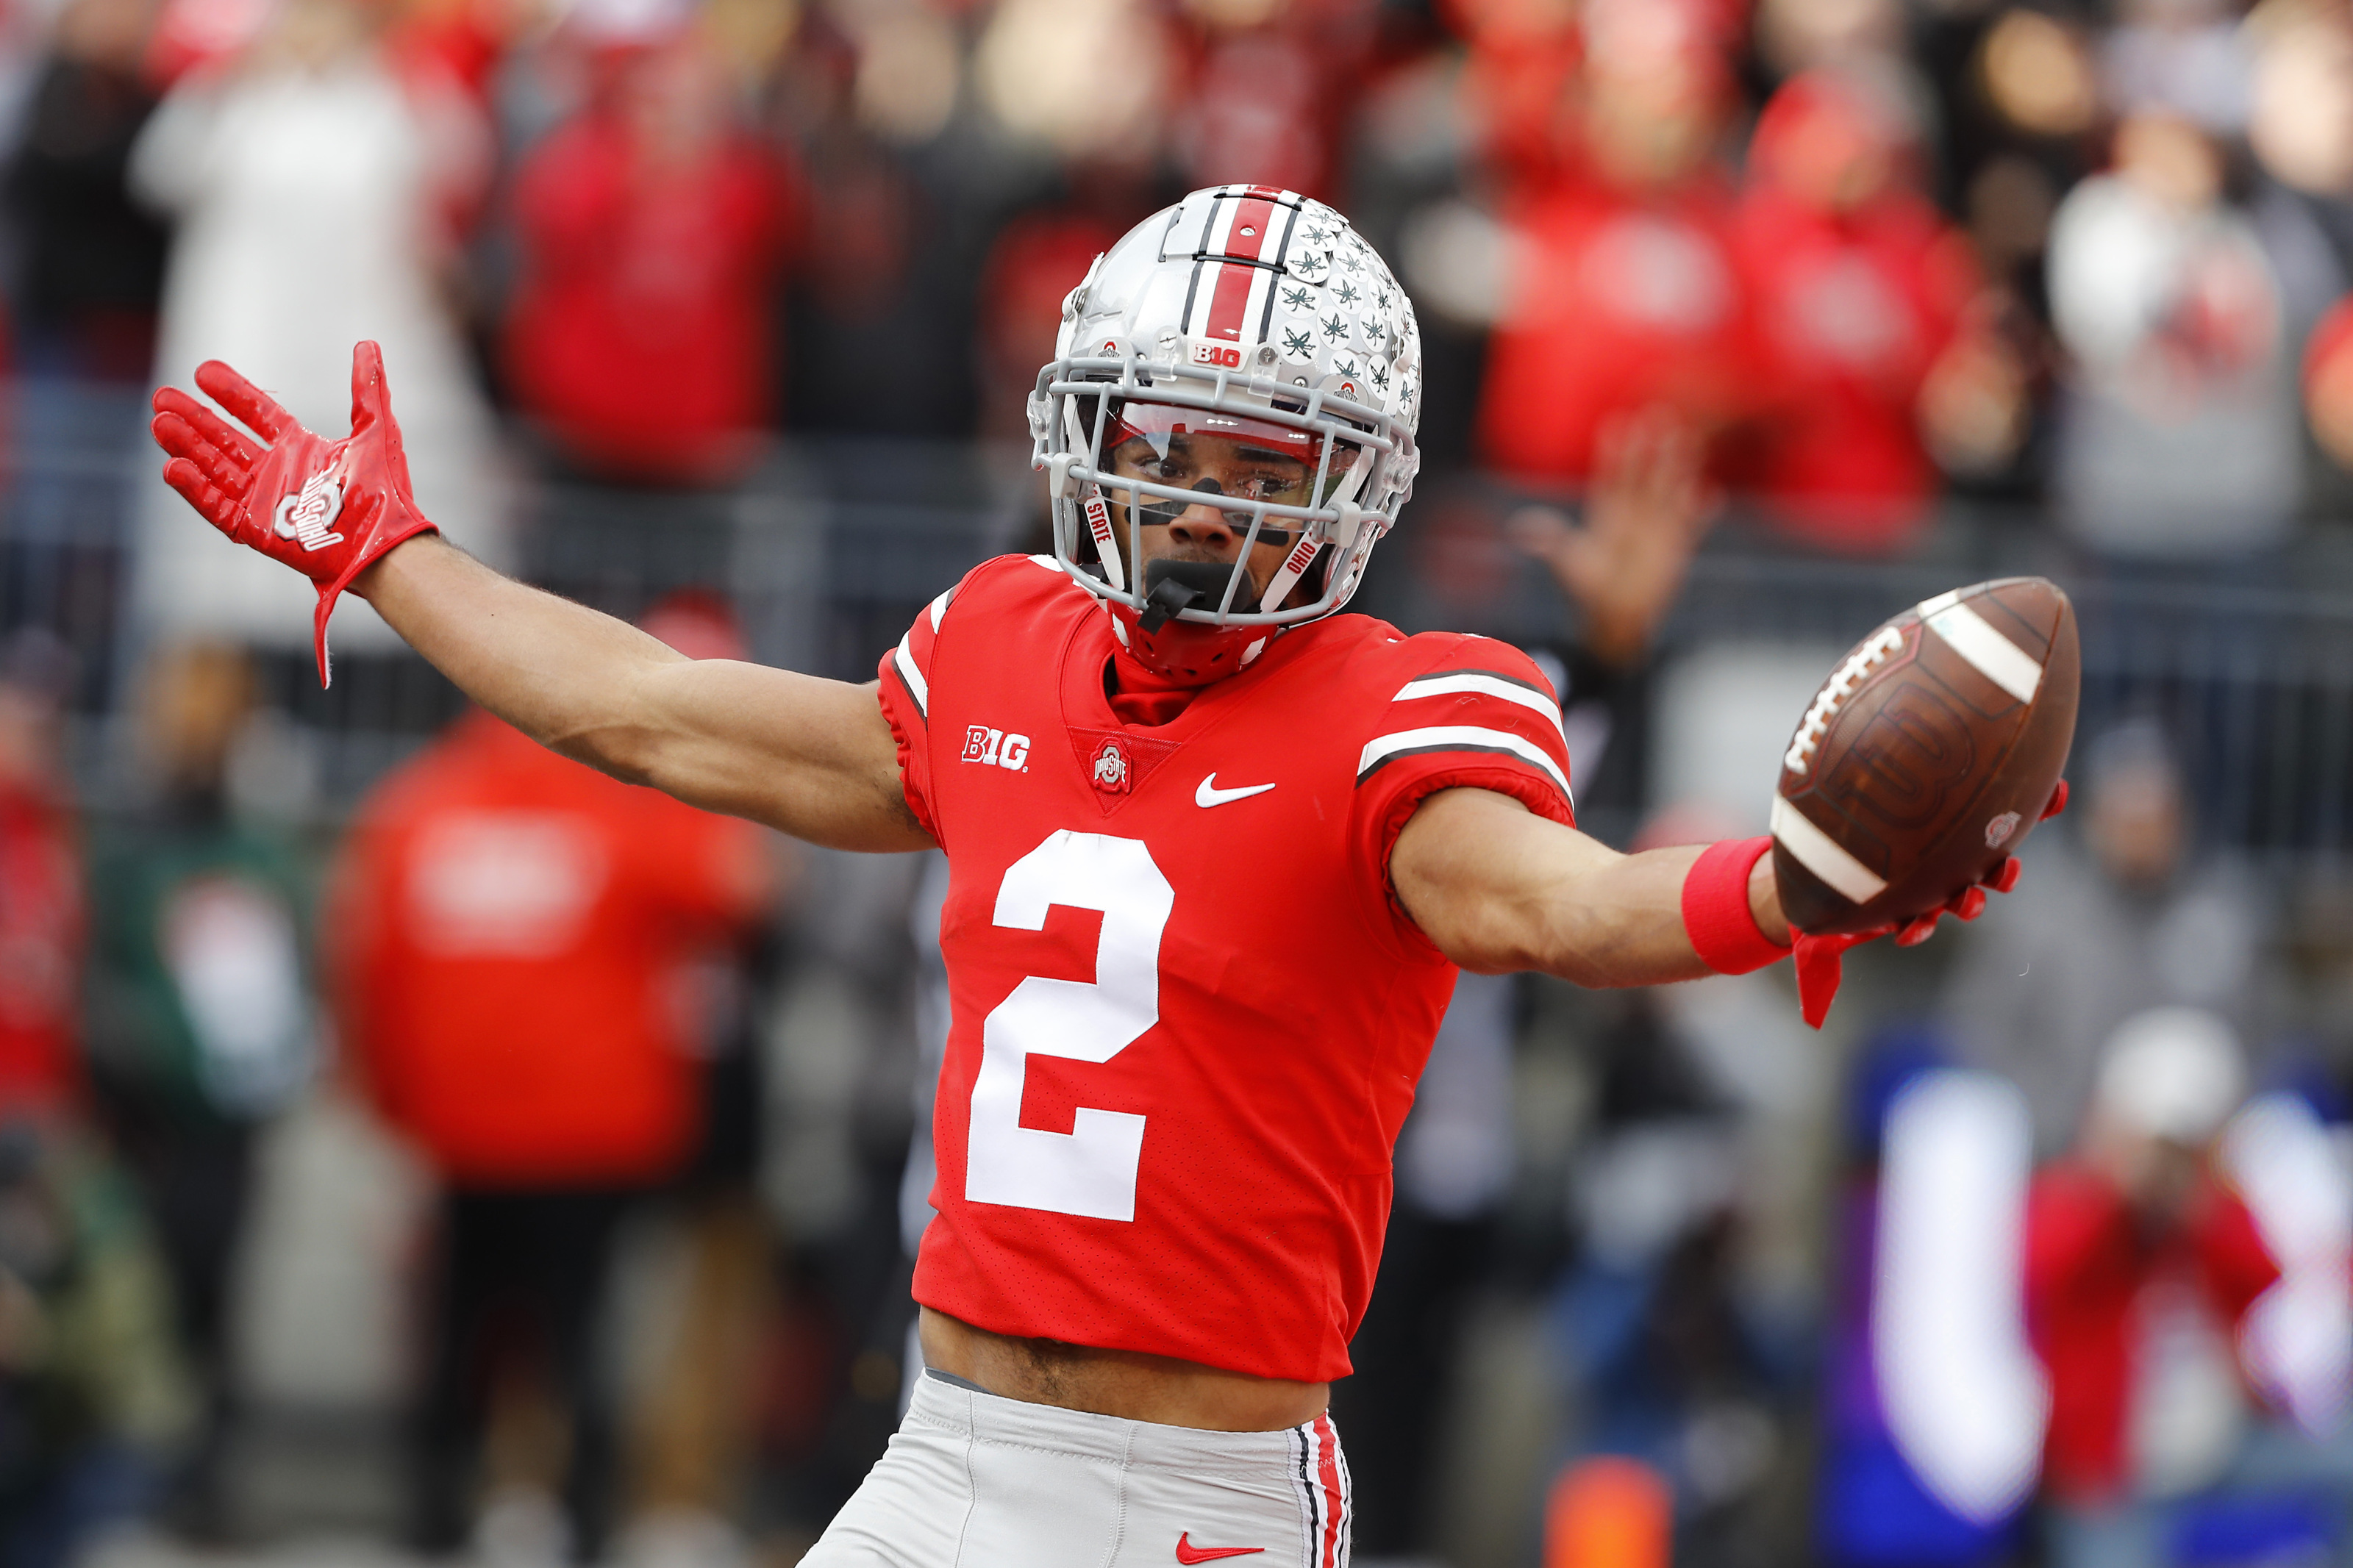 2022 NFL Draft Prospects to Watch: Ohio State vs. Michigan